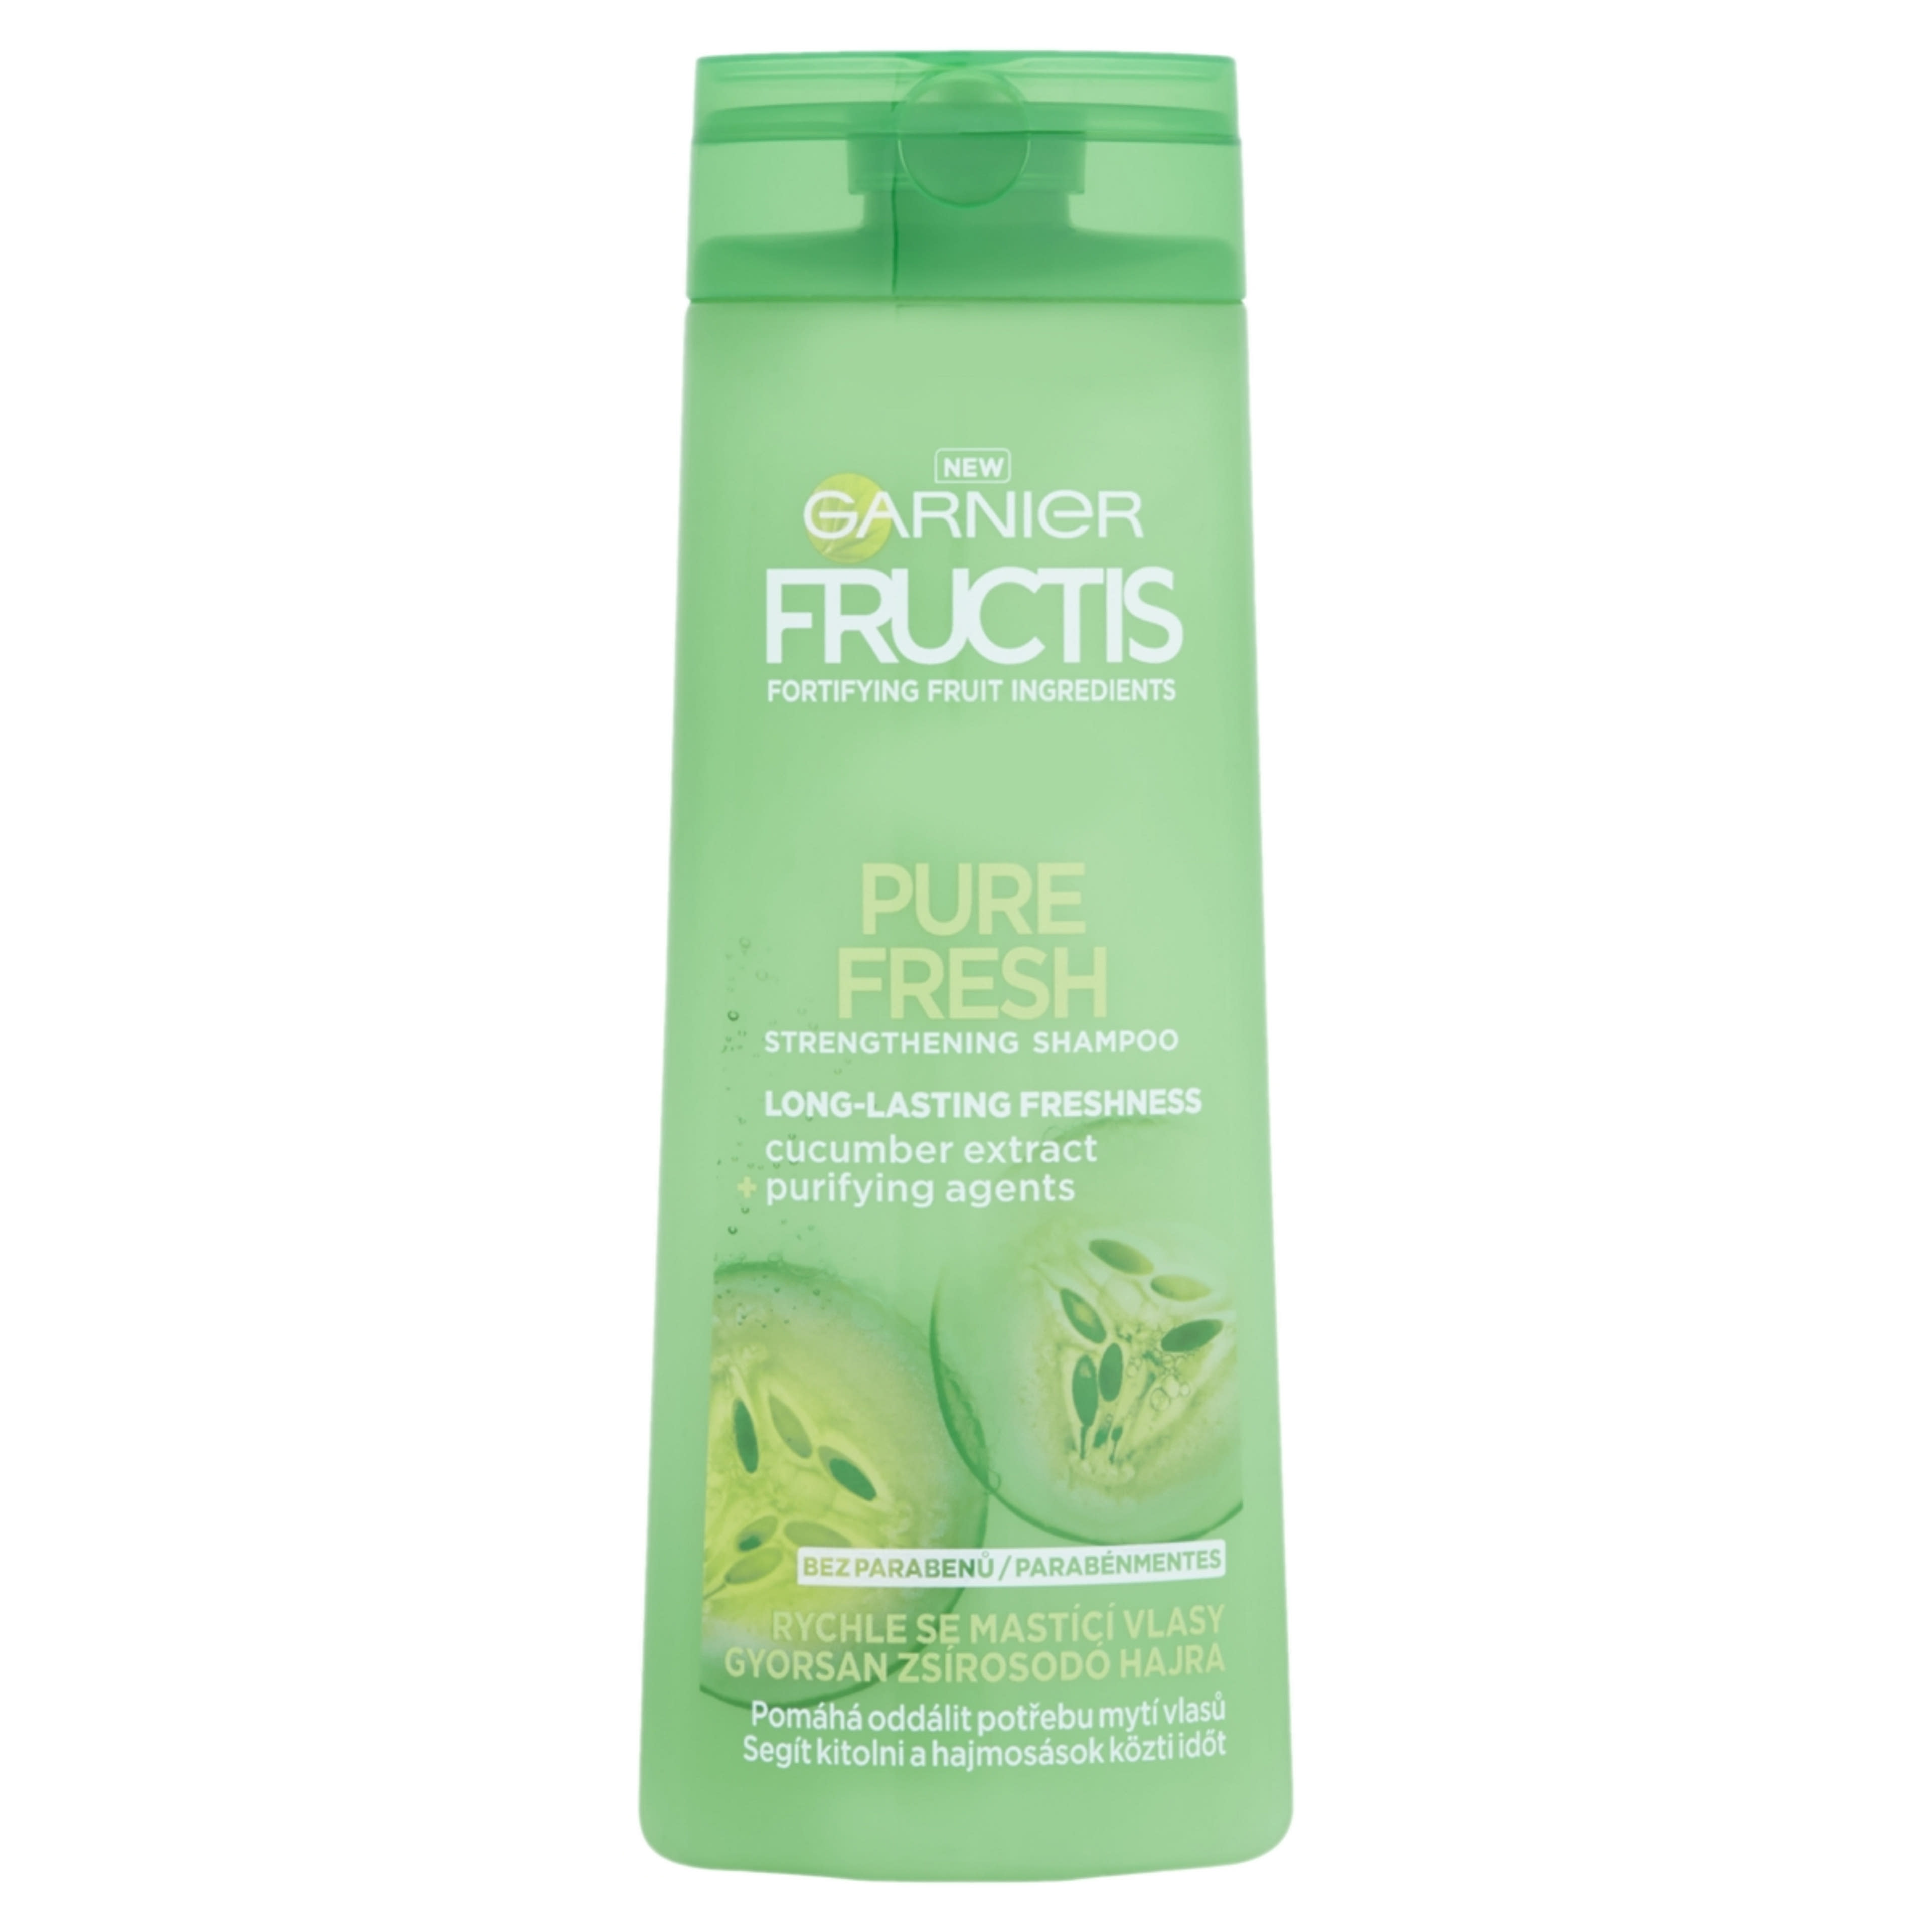 Garnier Fructis Pure Fresh sampon gyorsan zsírosodó hajra - 400 ml-1